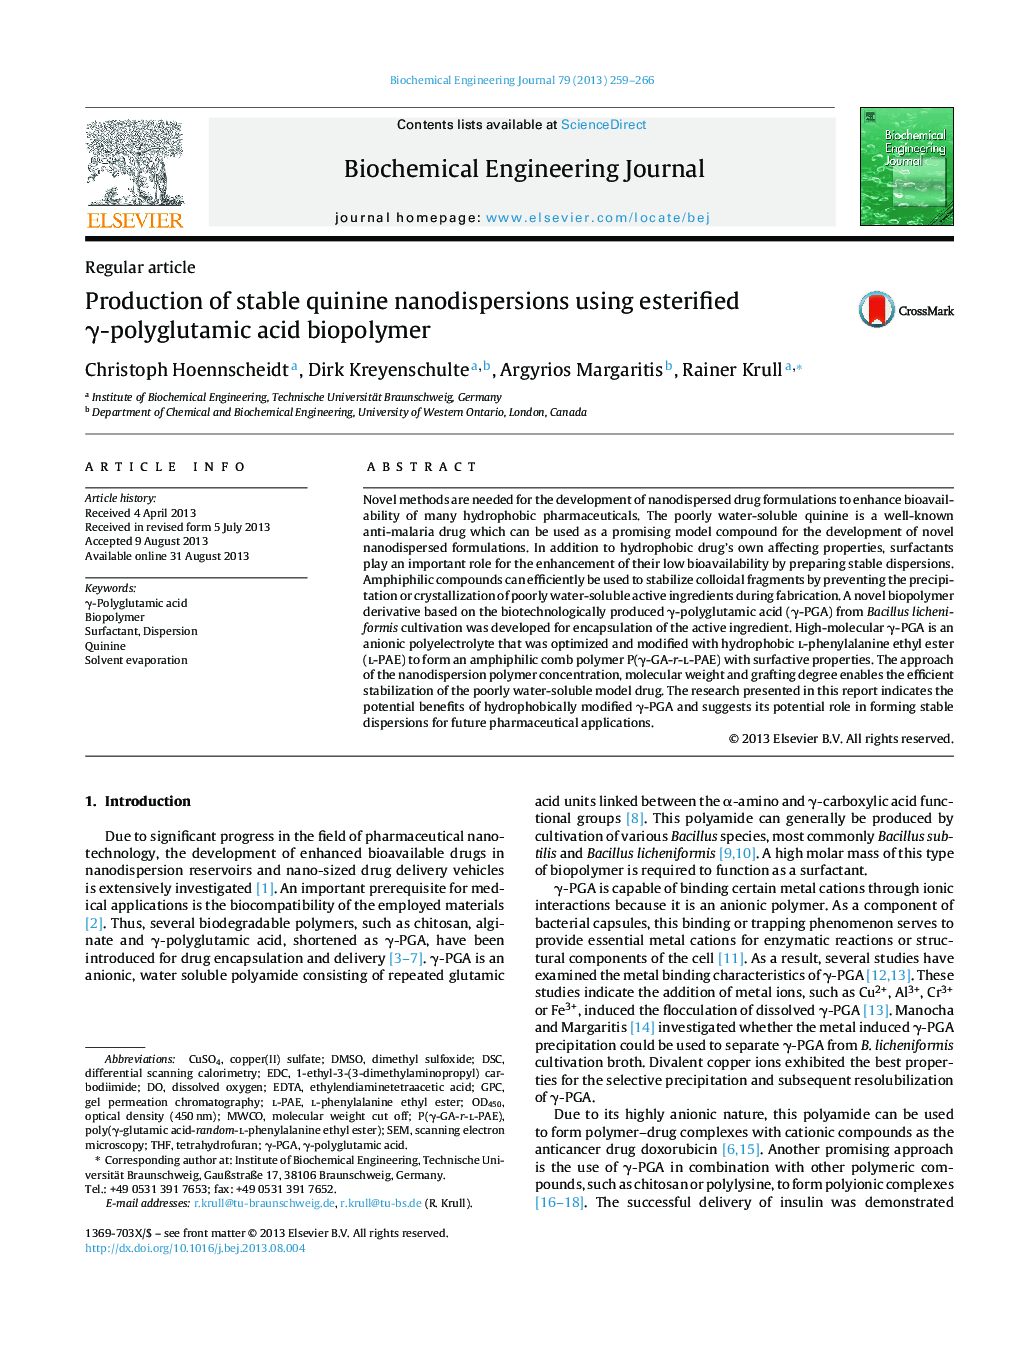 Production of stable quinine nanodispersions using esterified γ-polyglutamic acid biopolymer